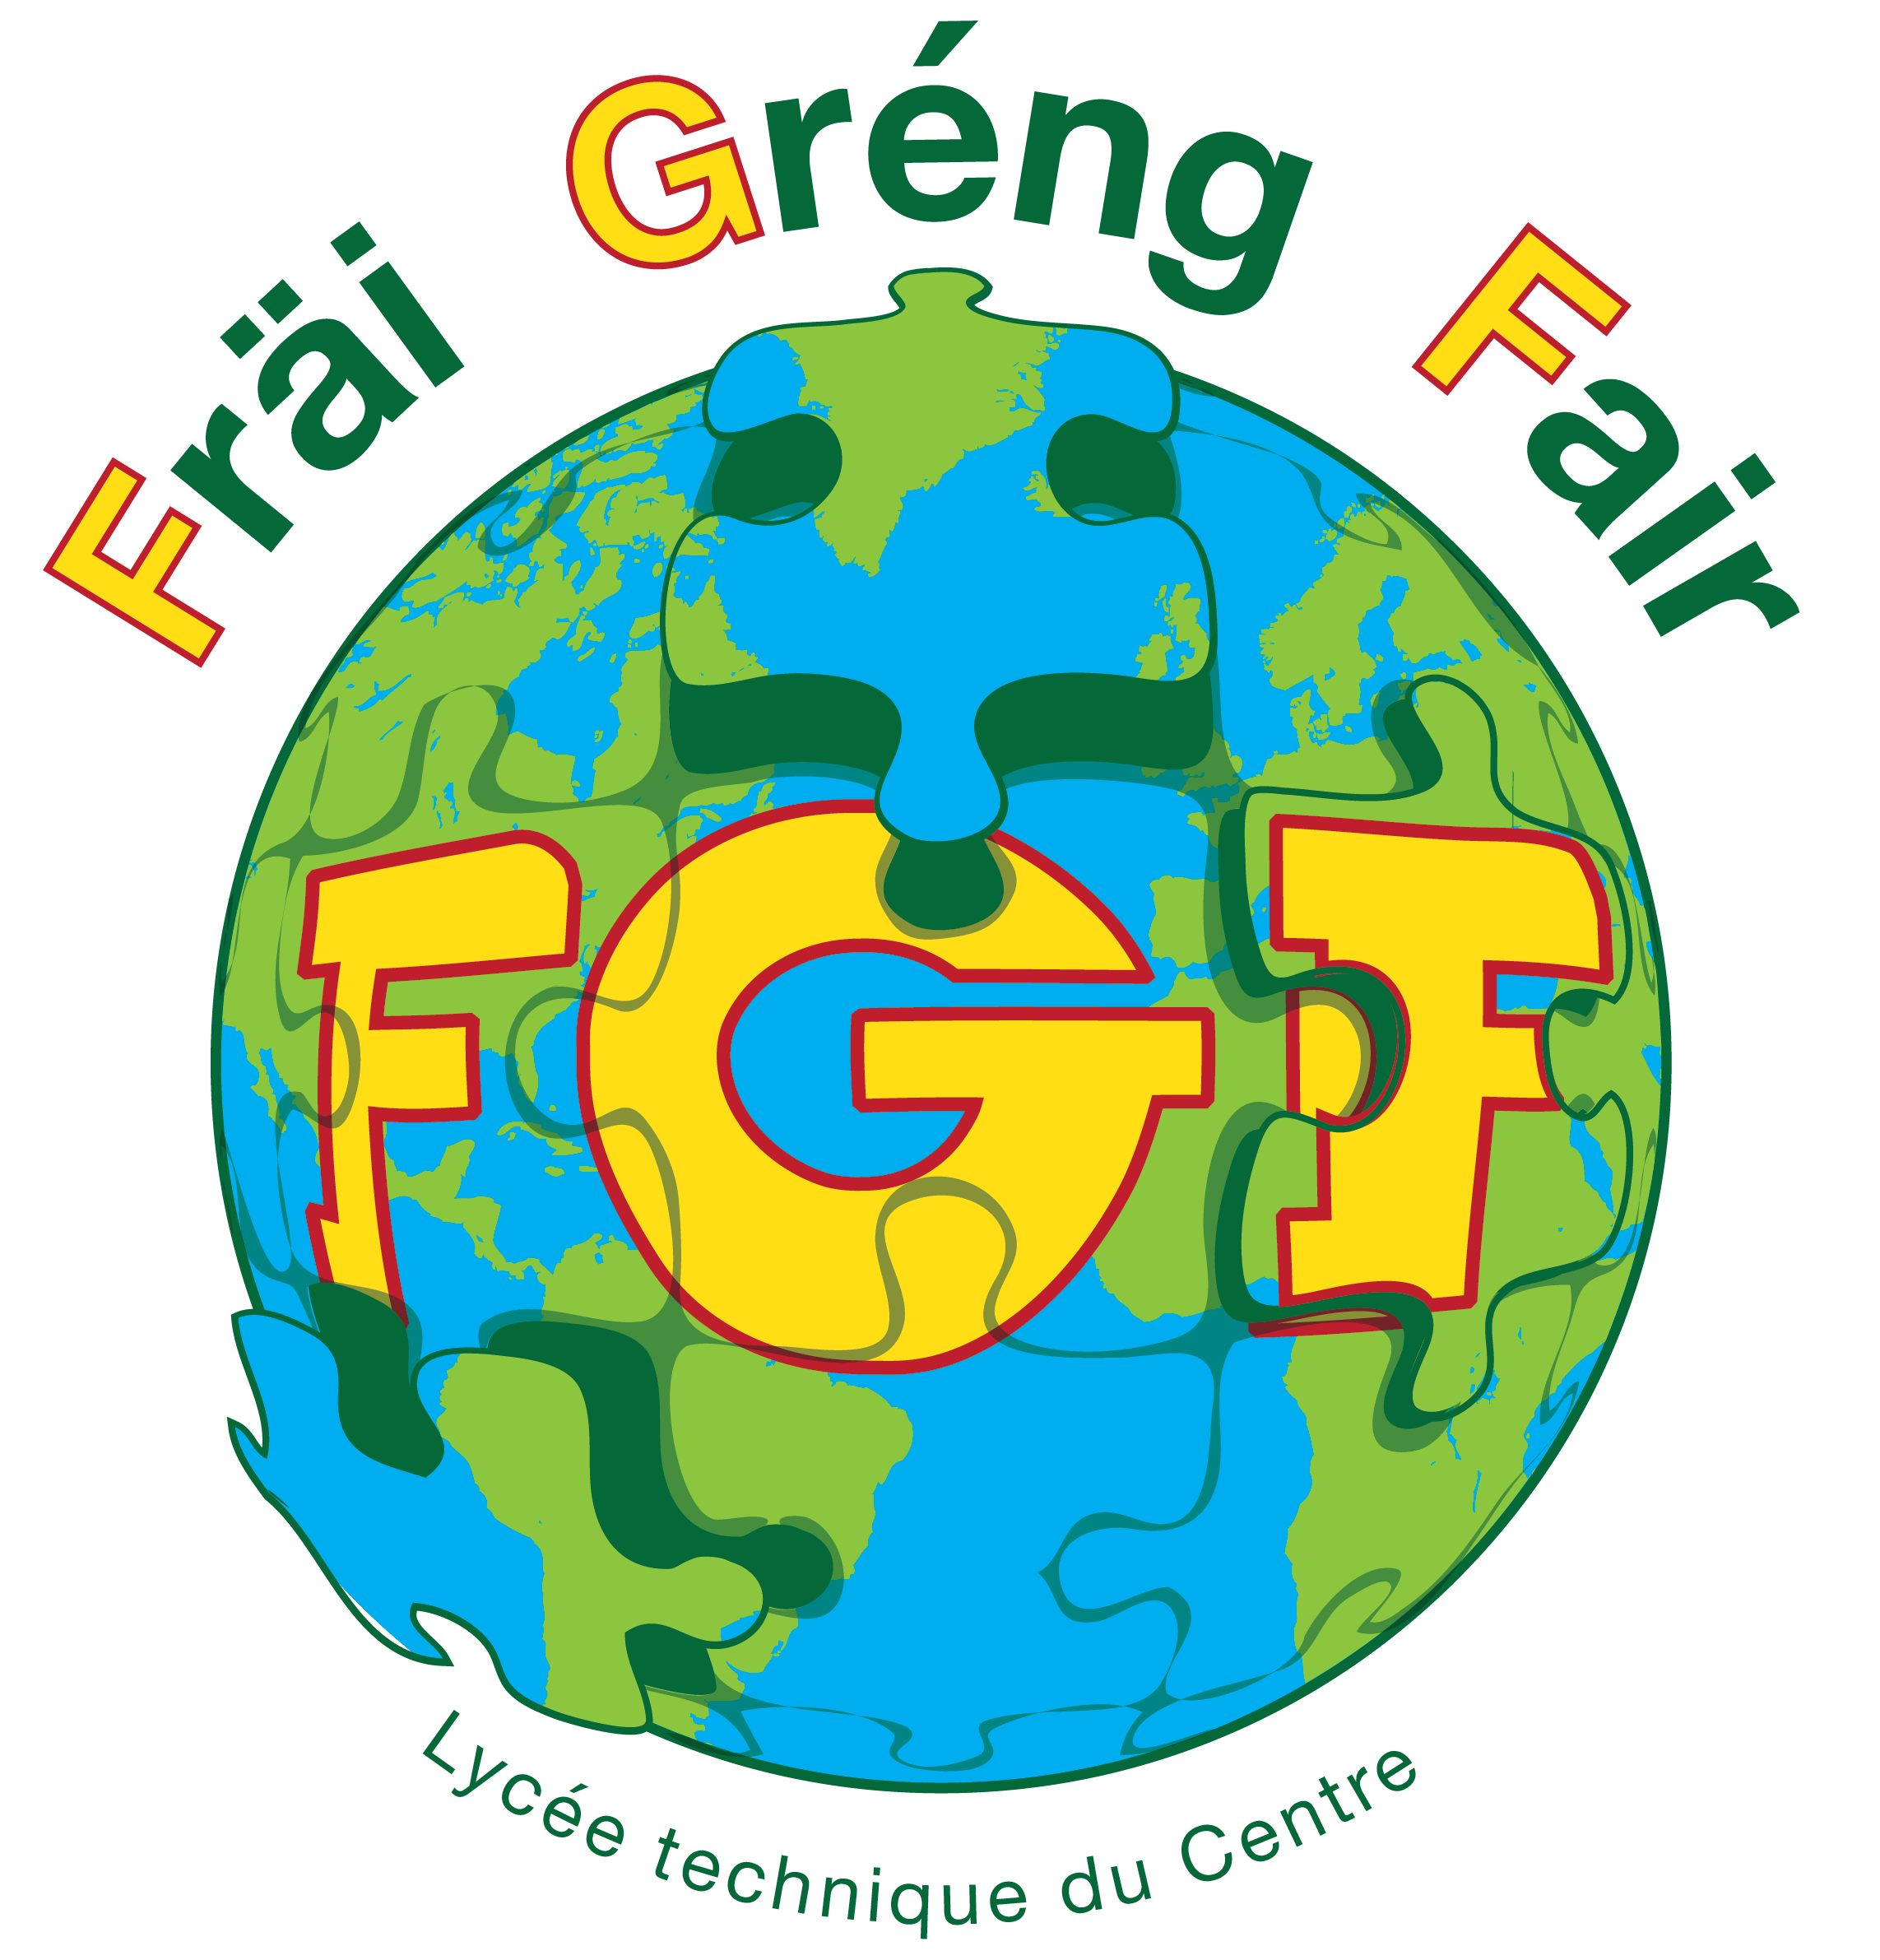 fgf logo